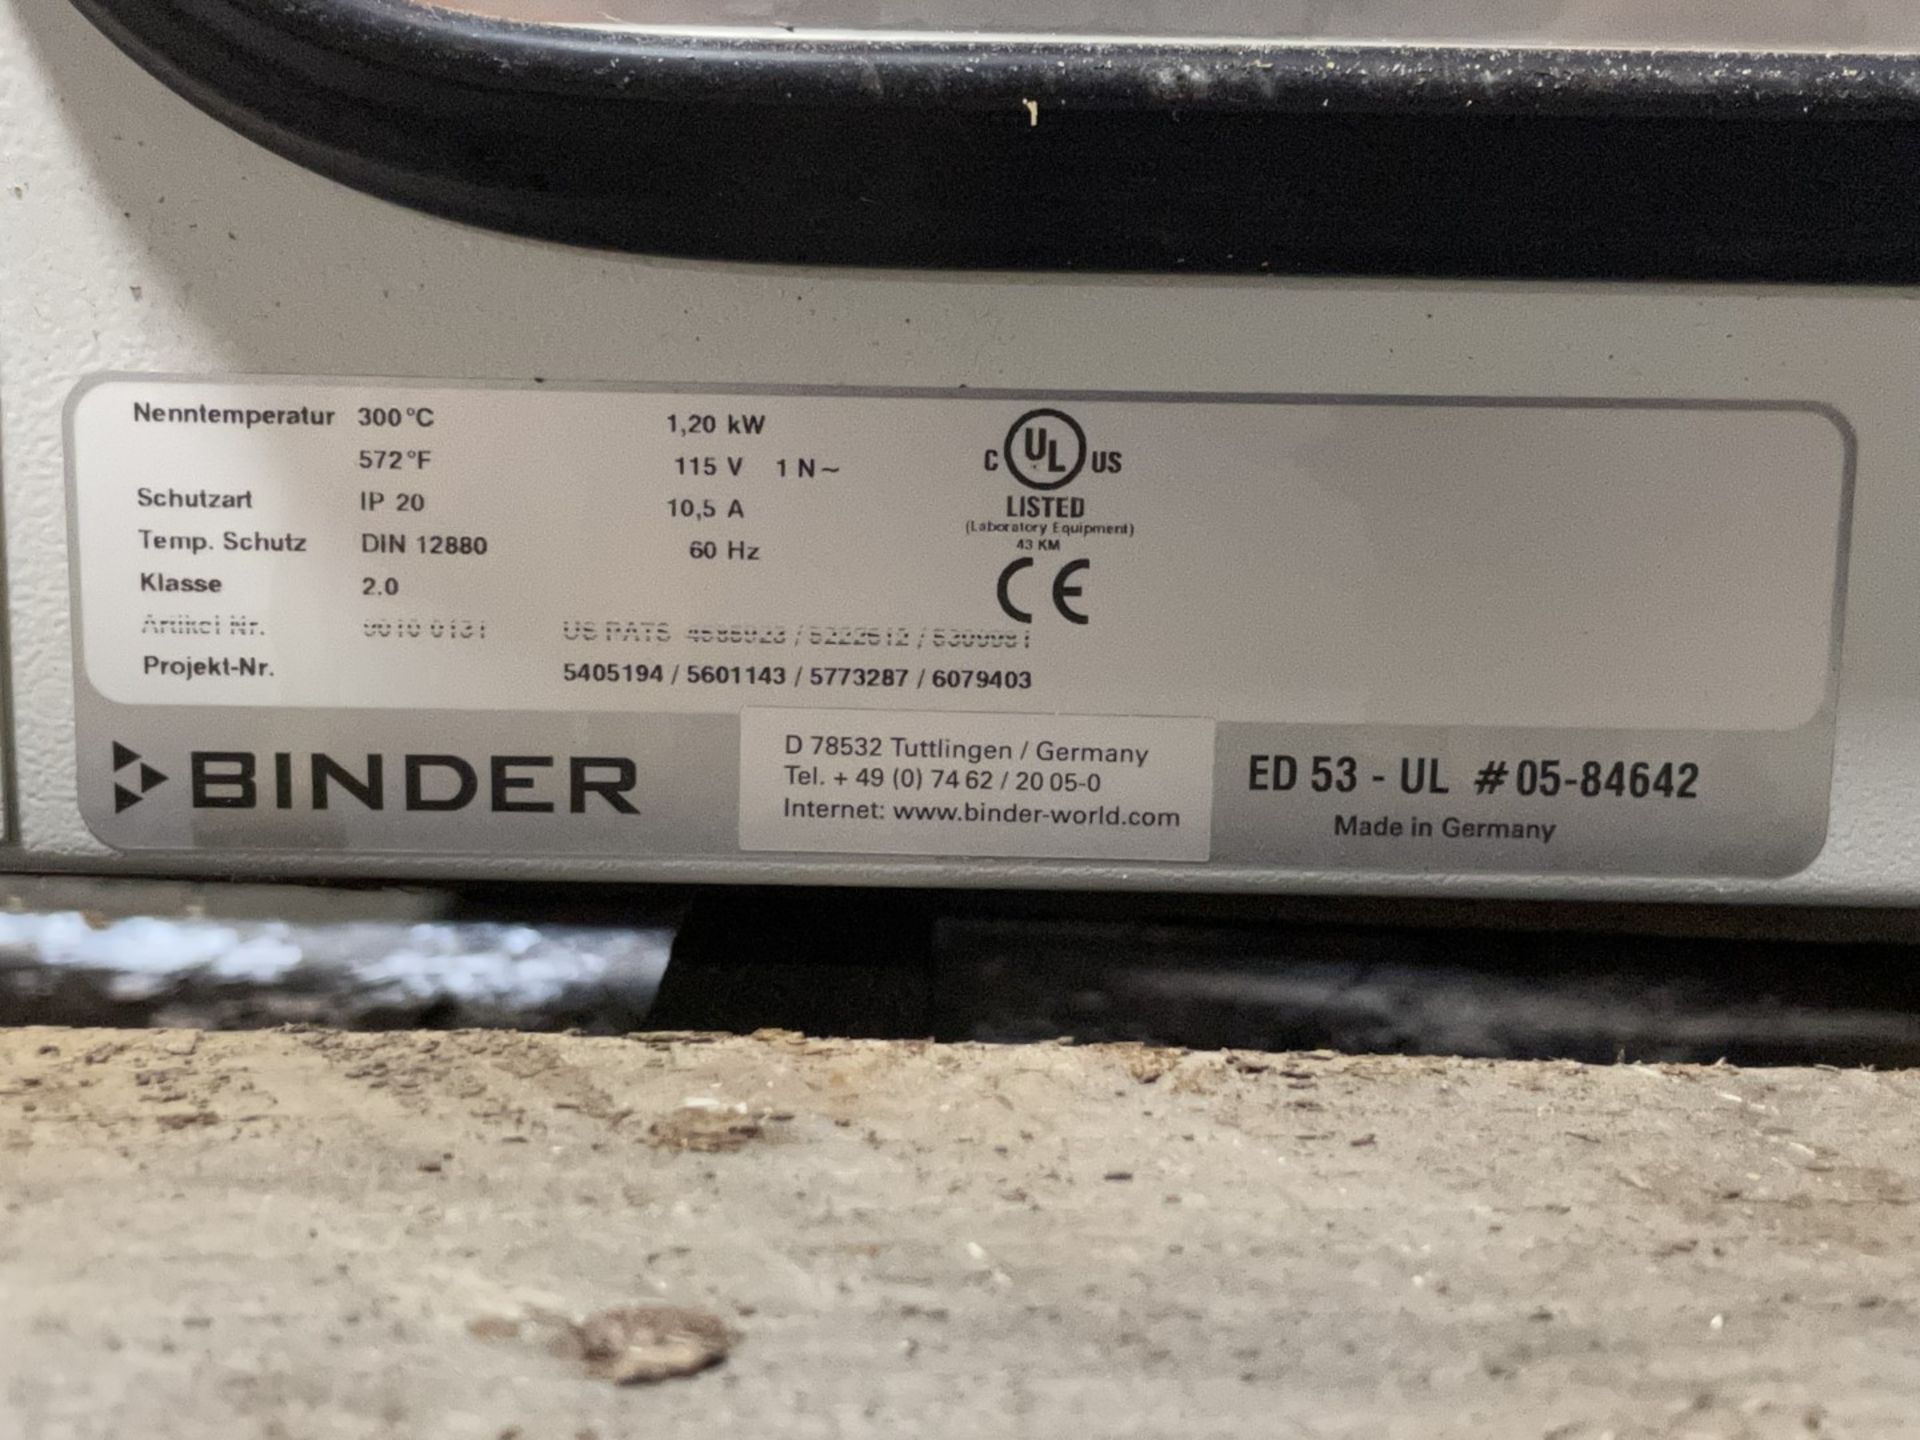 Binder Laboratory Oven, model ED 53-UL, 572 f max temp, 1.2 kw, 115 volt, serial# 05-84642 - Image 2 of 8